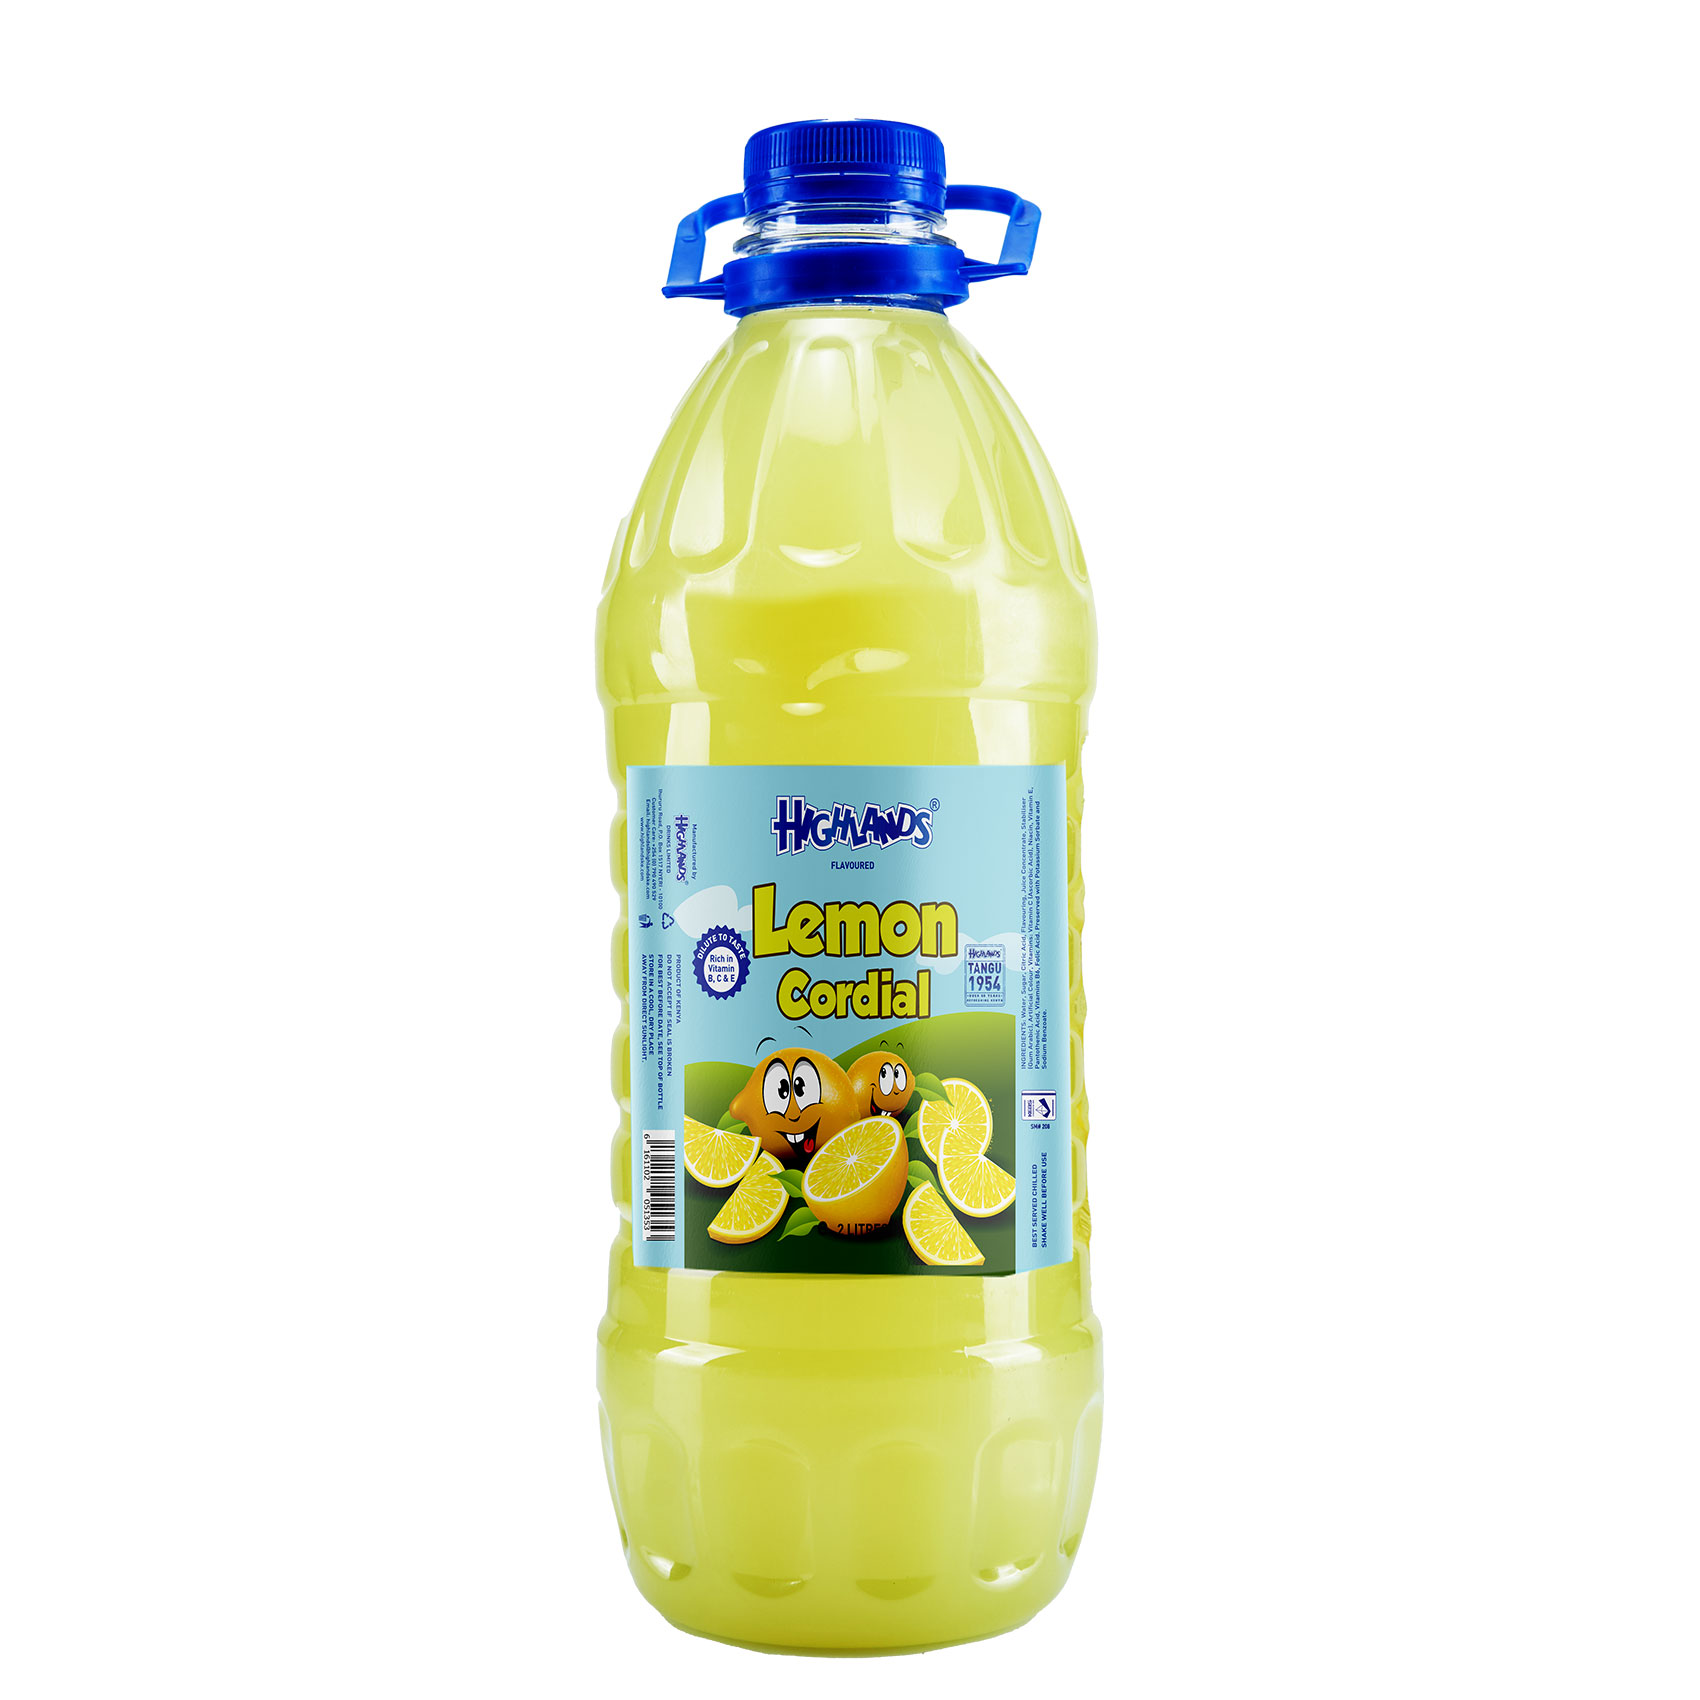 Highlands Cordial Lemon Juice 2L